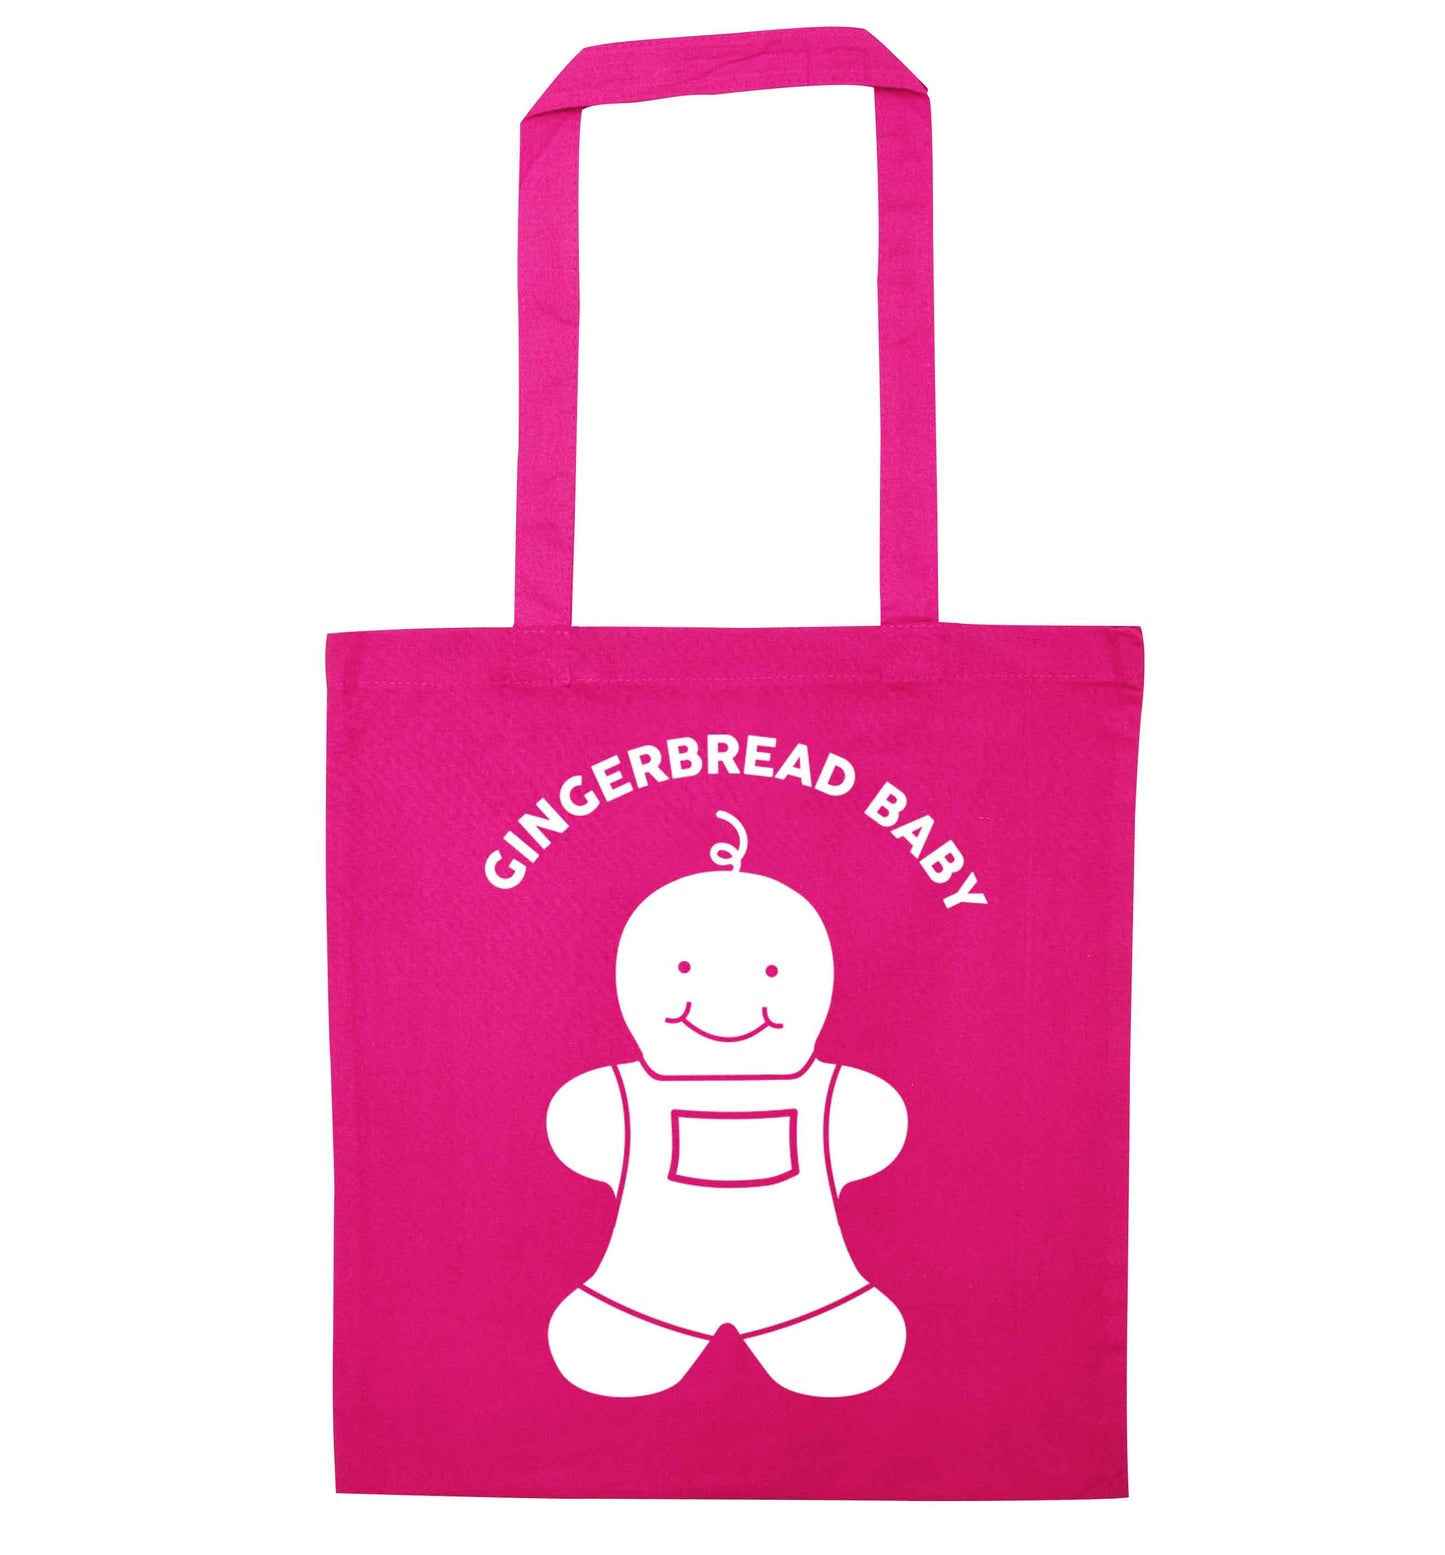 Gingerbread baby pink tote bag